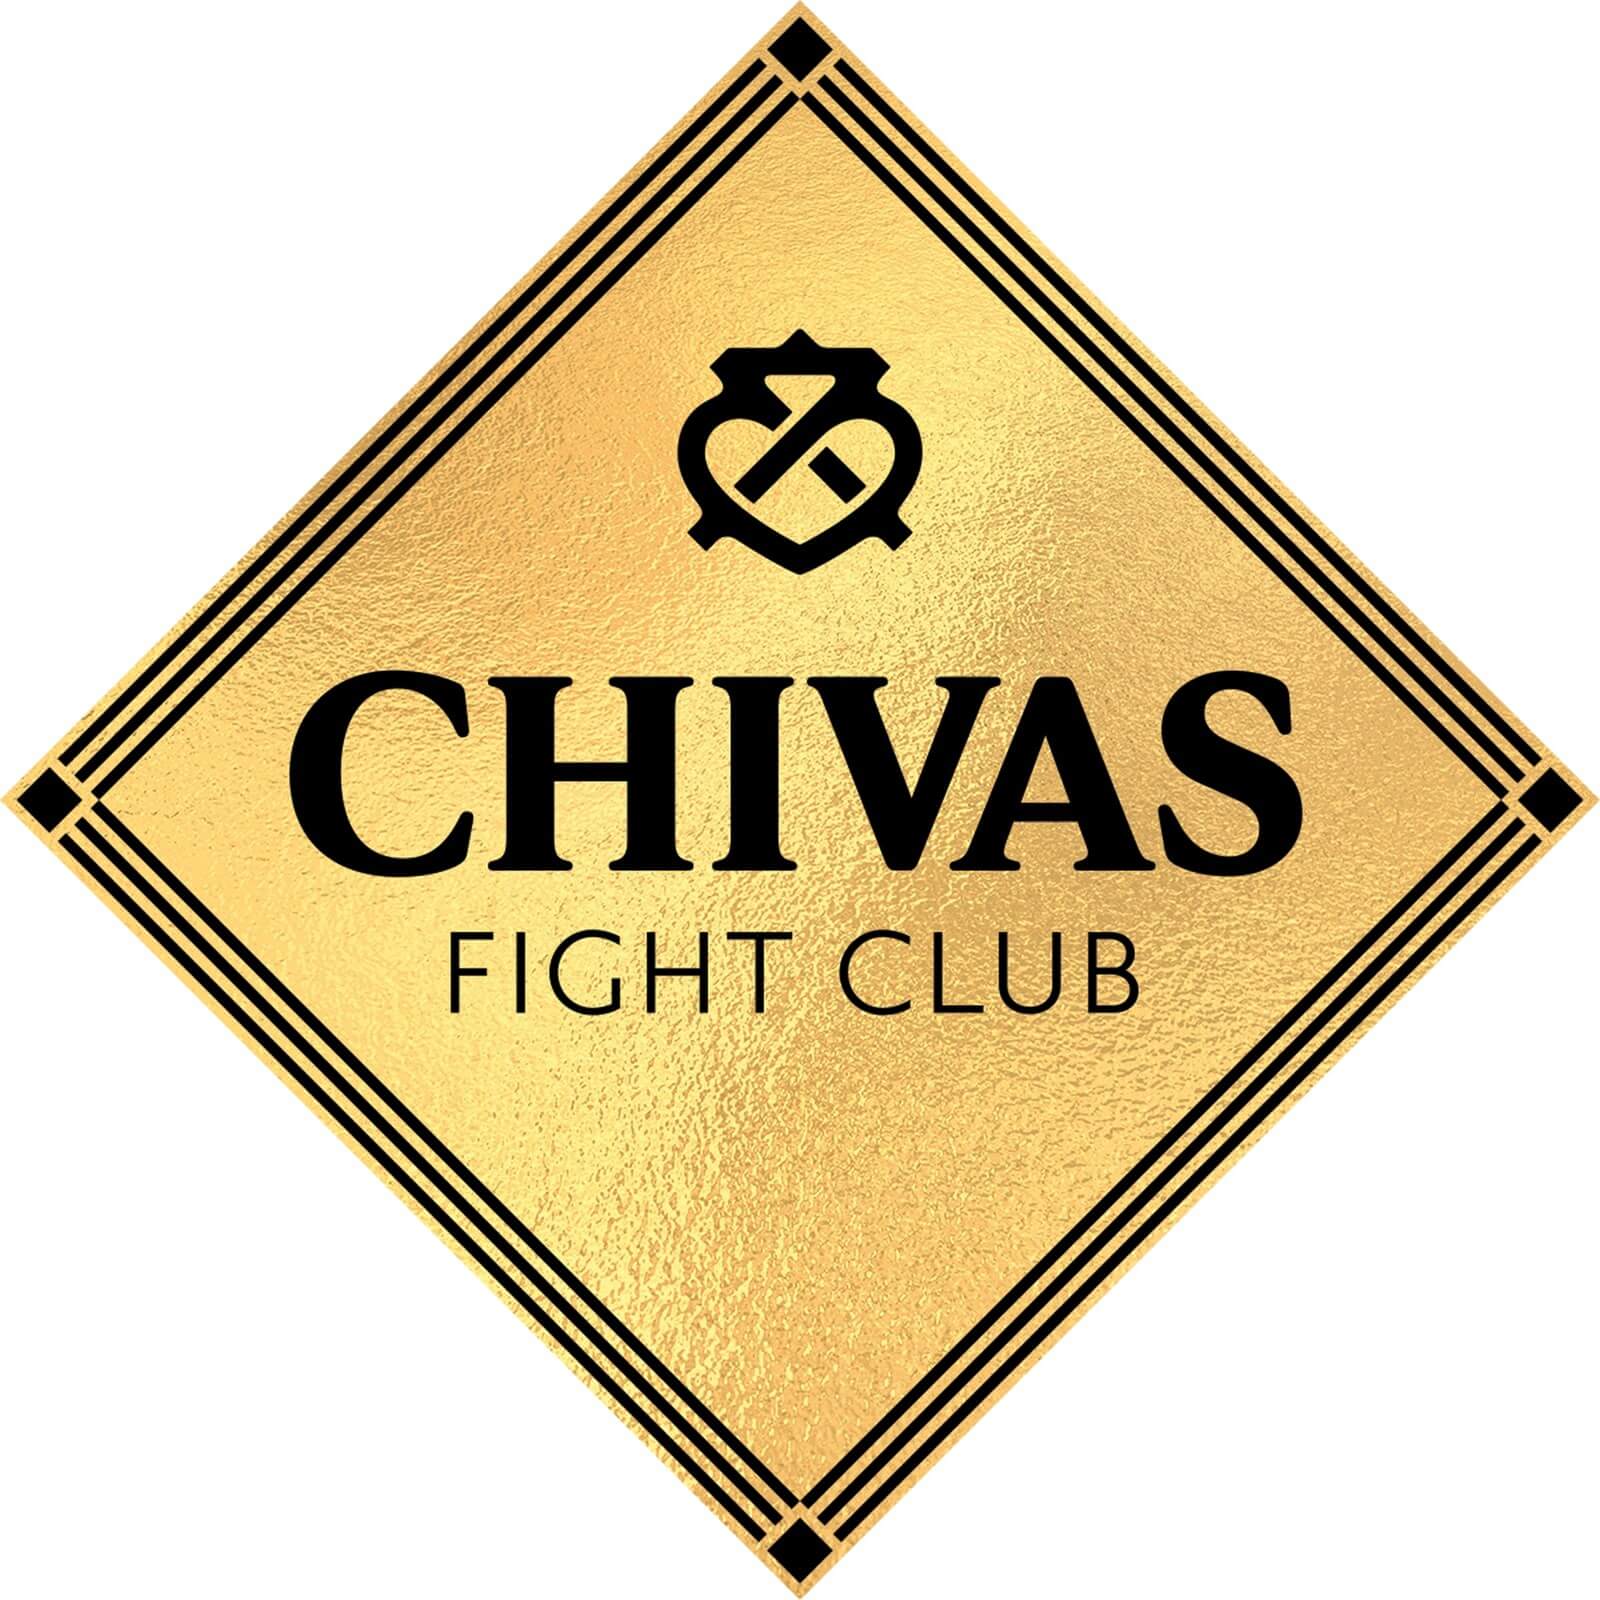 Chivas Fight Club logo